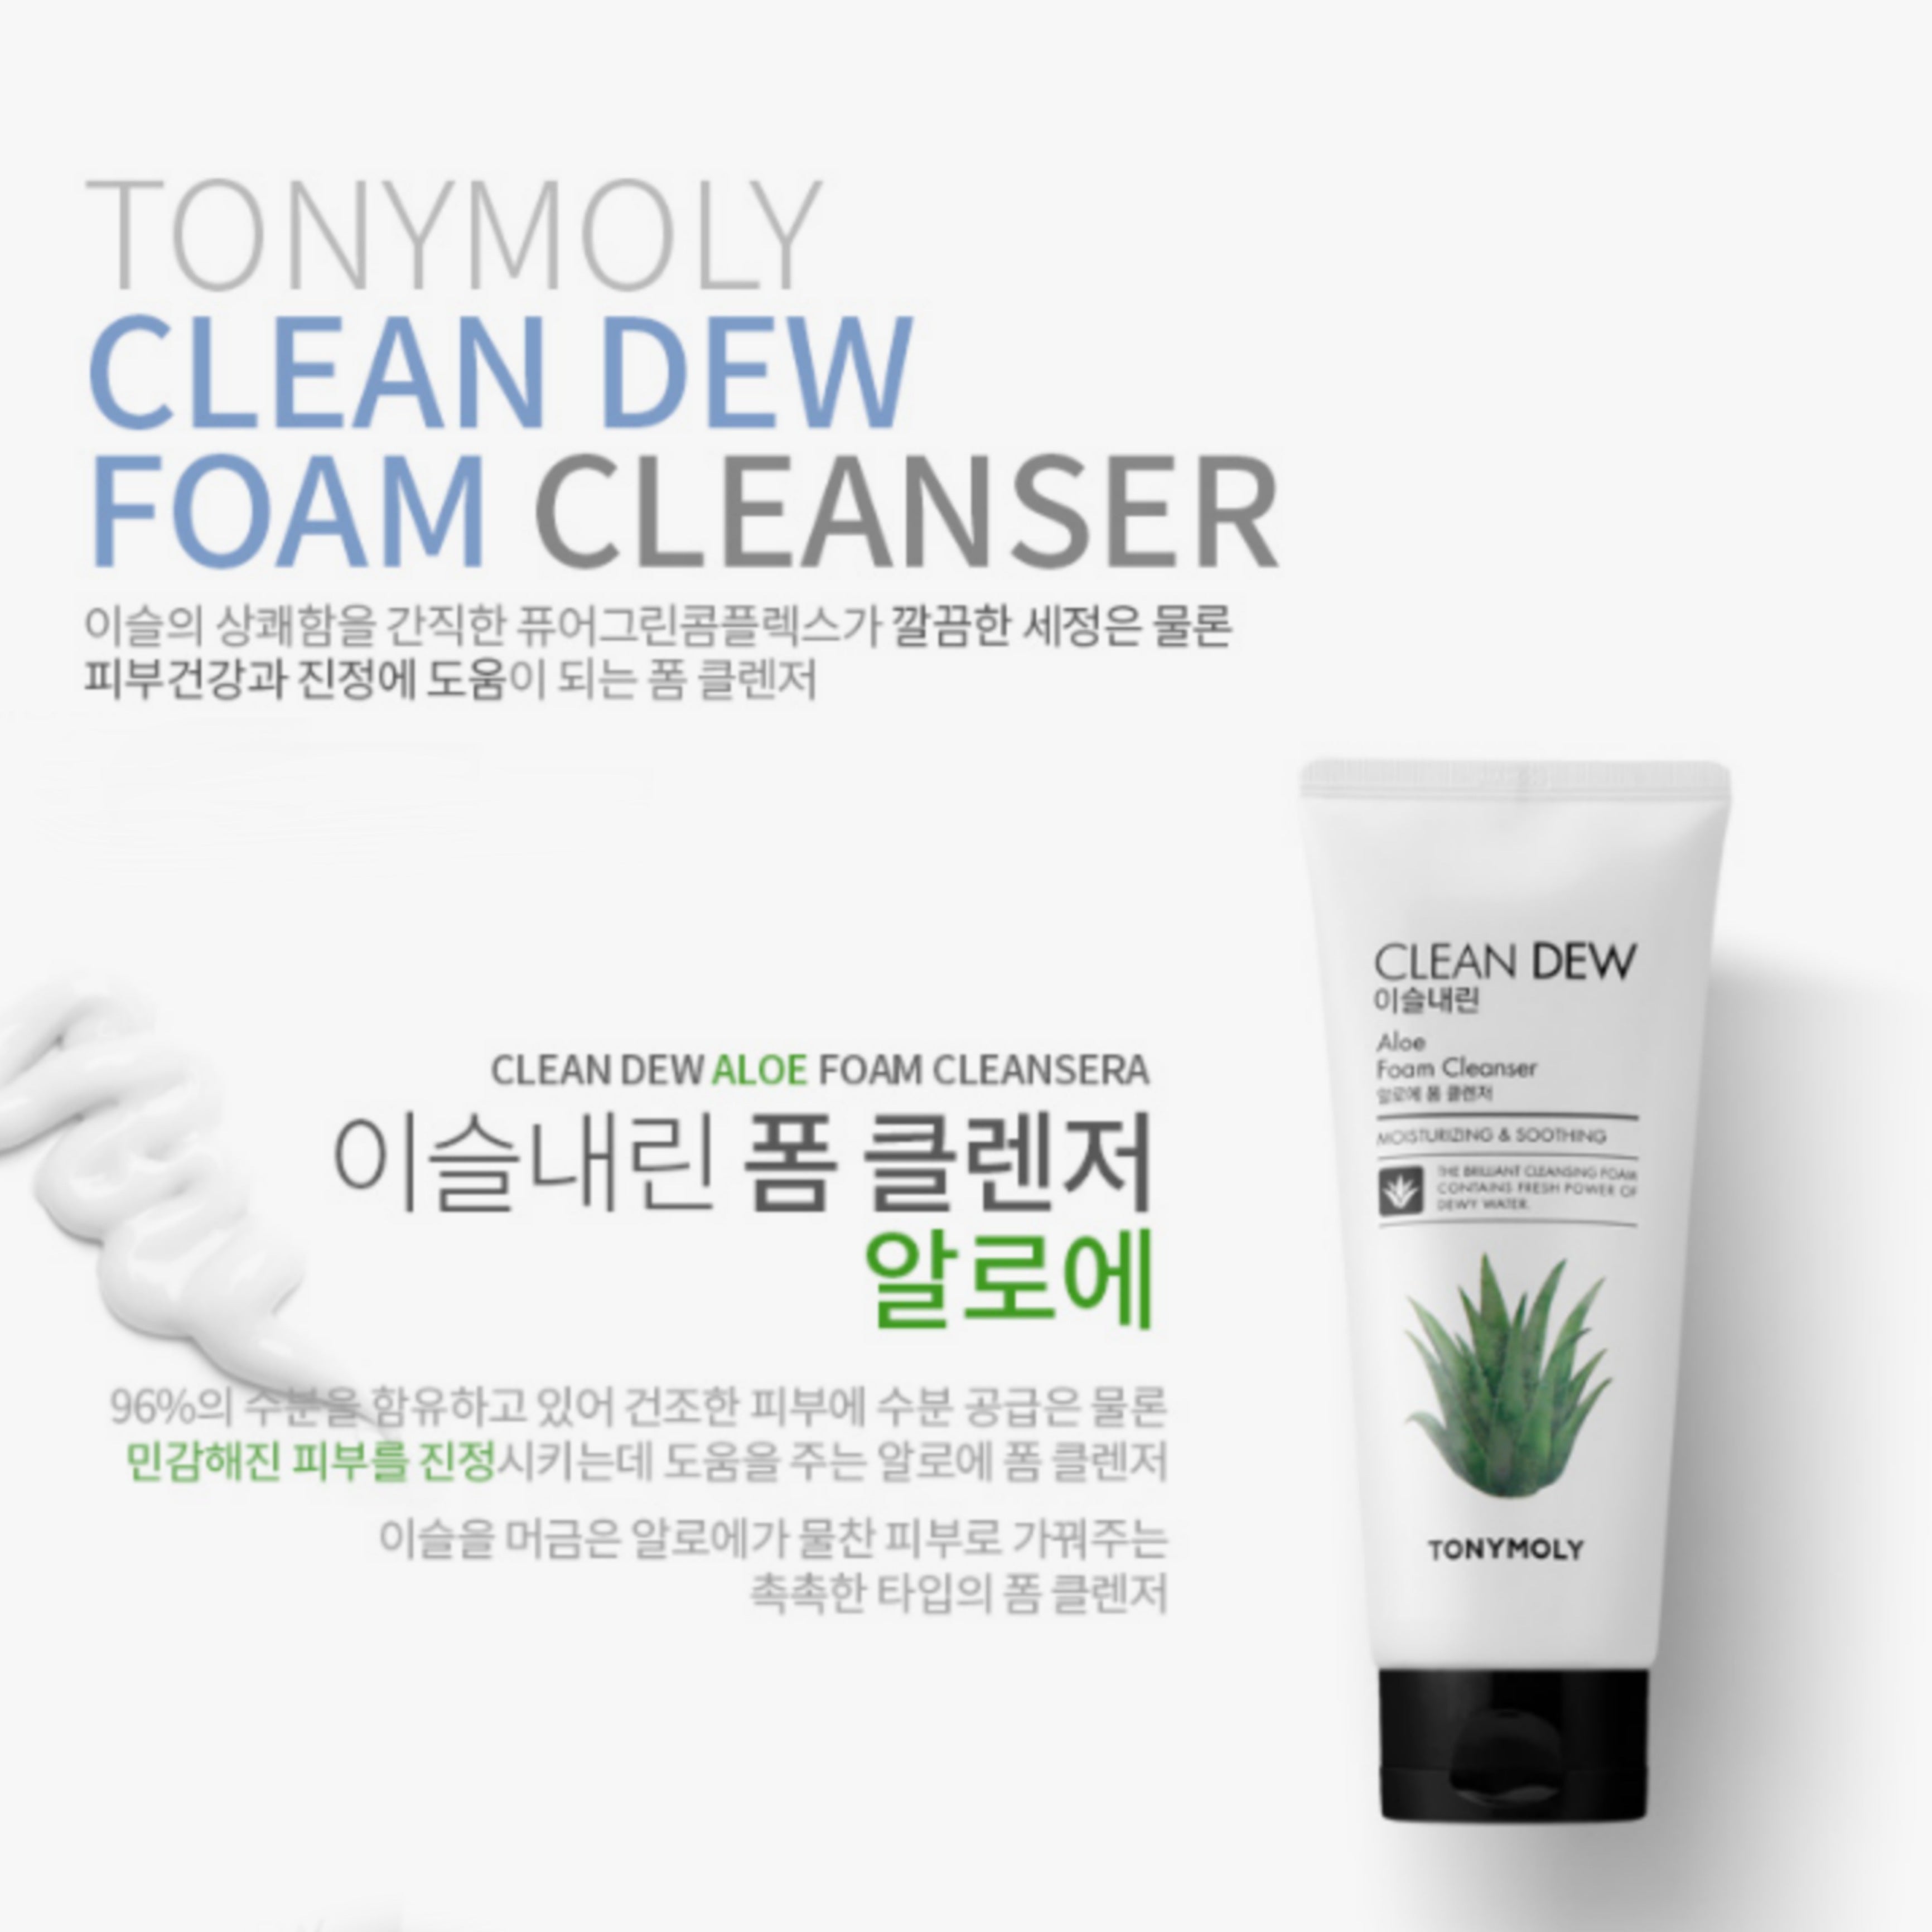 TONYMOLY Clean dew foam cleanser aloe